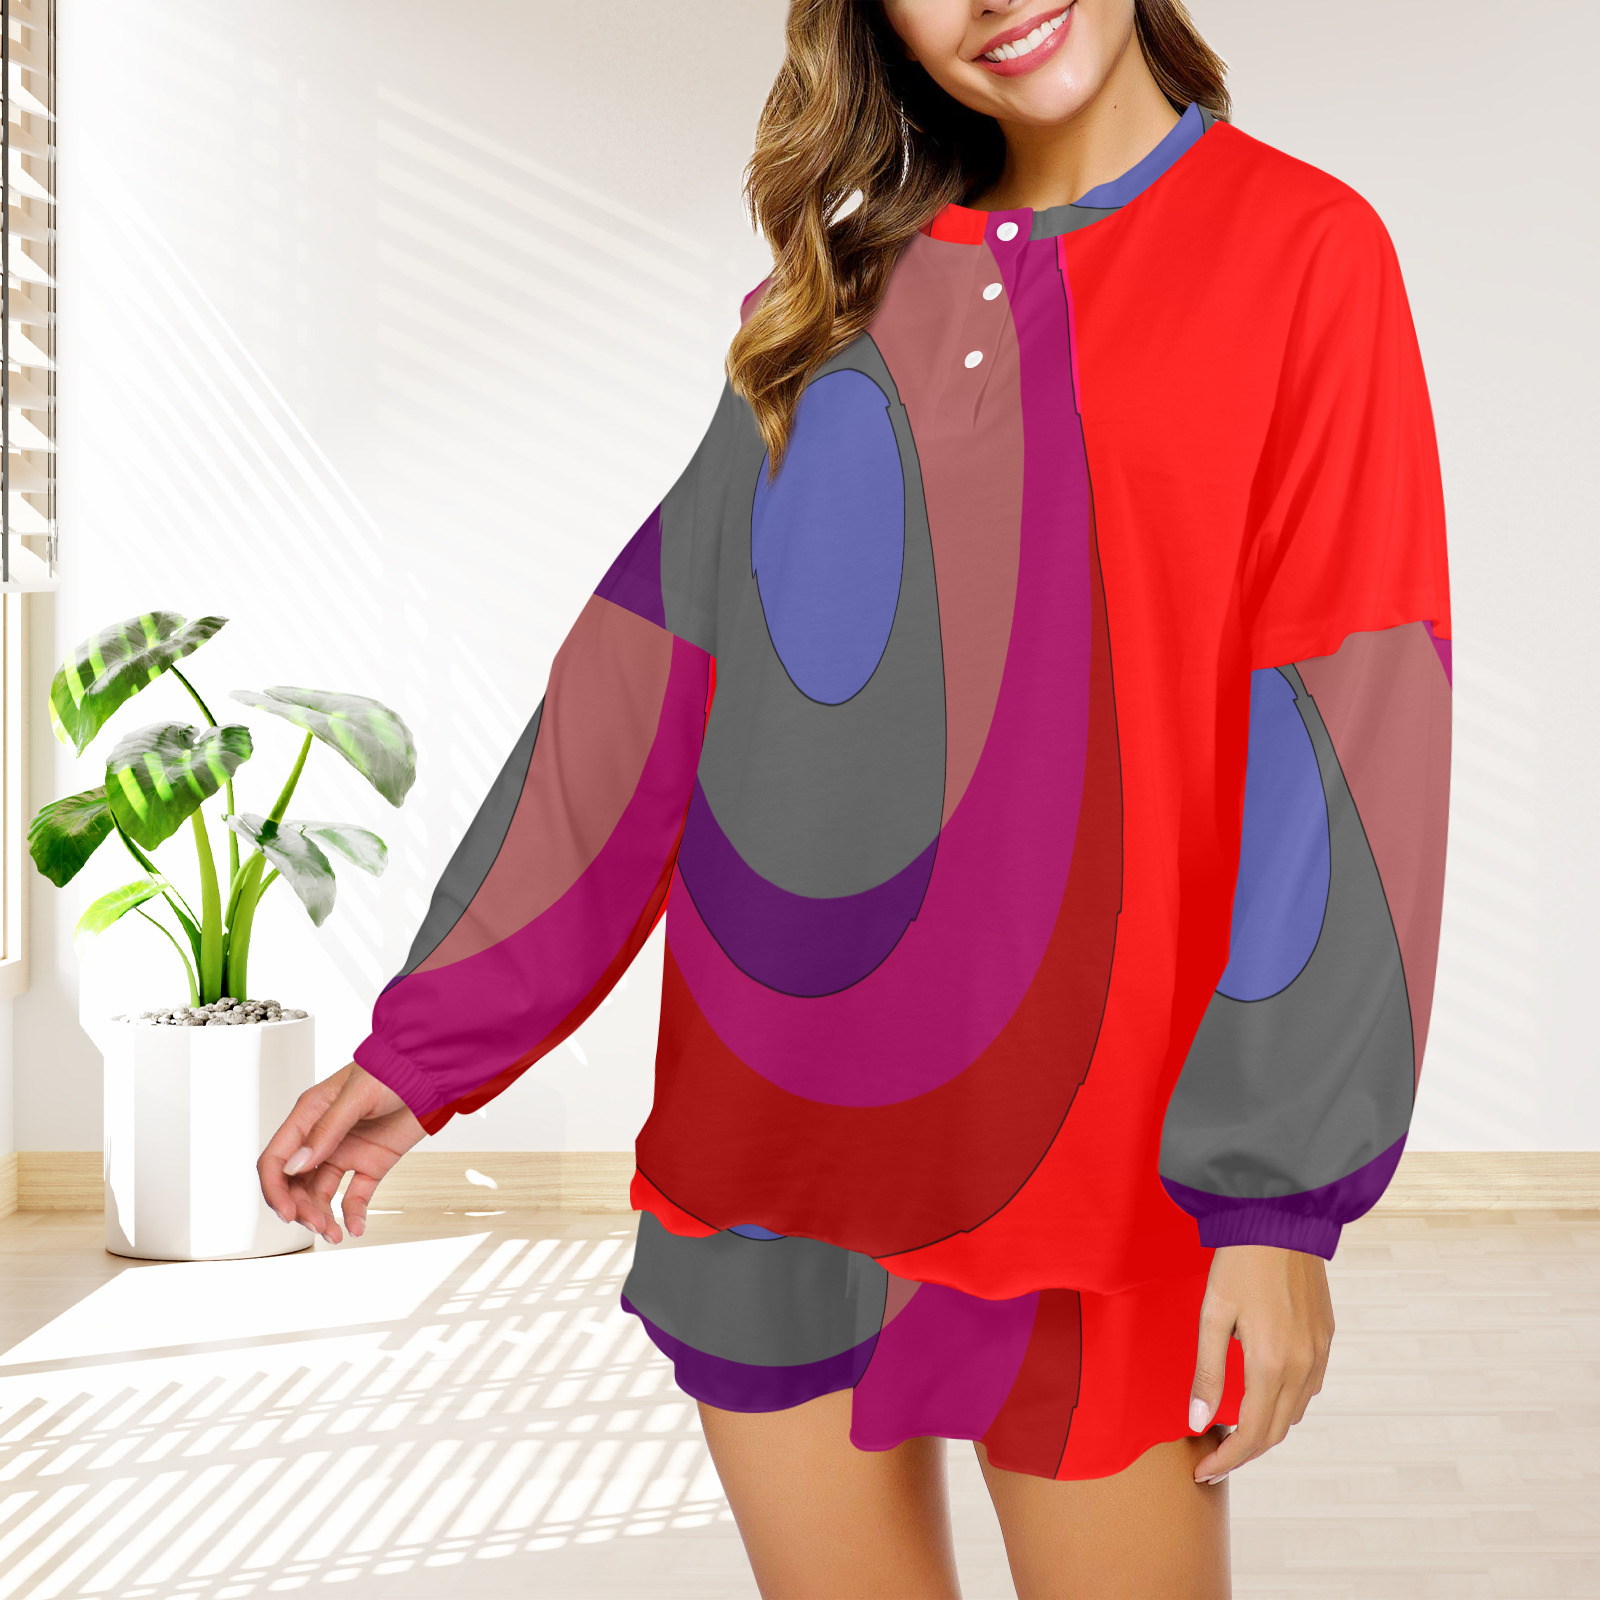 Red Abstract 714 Women's Long Sleeve Mid-Length Shorts Pajama Set